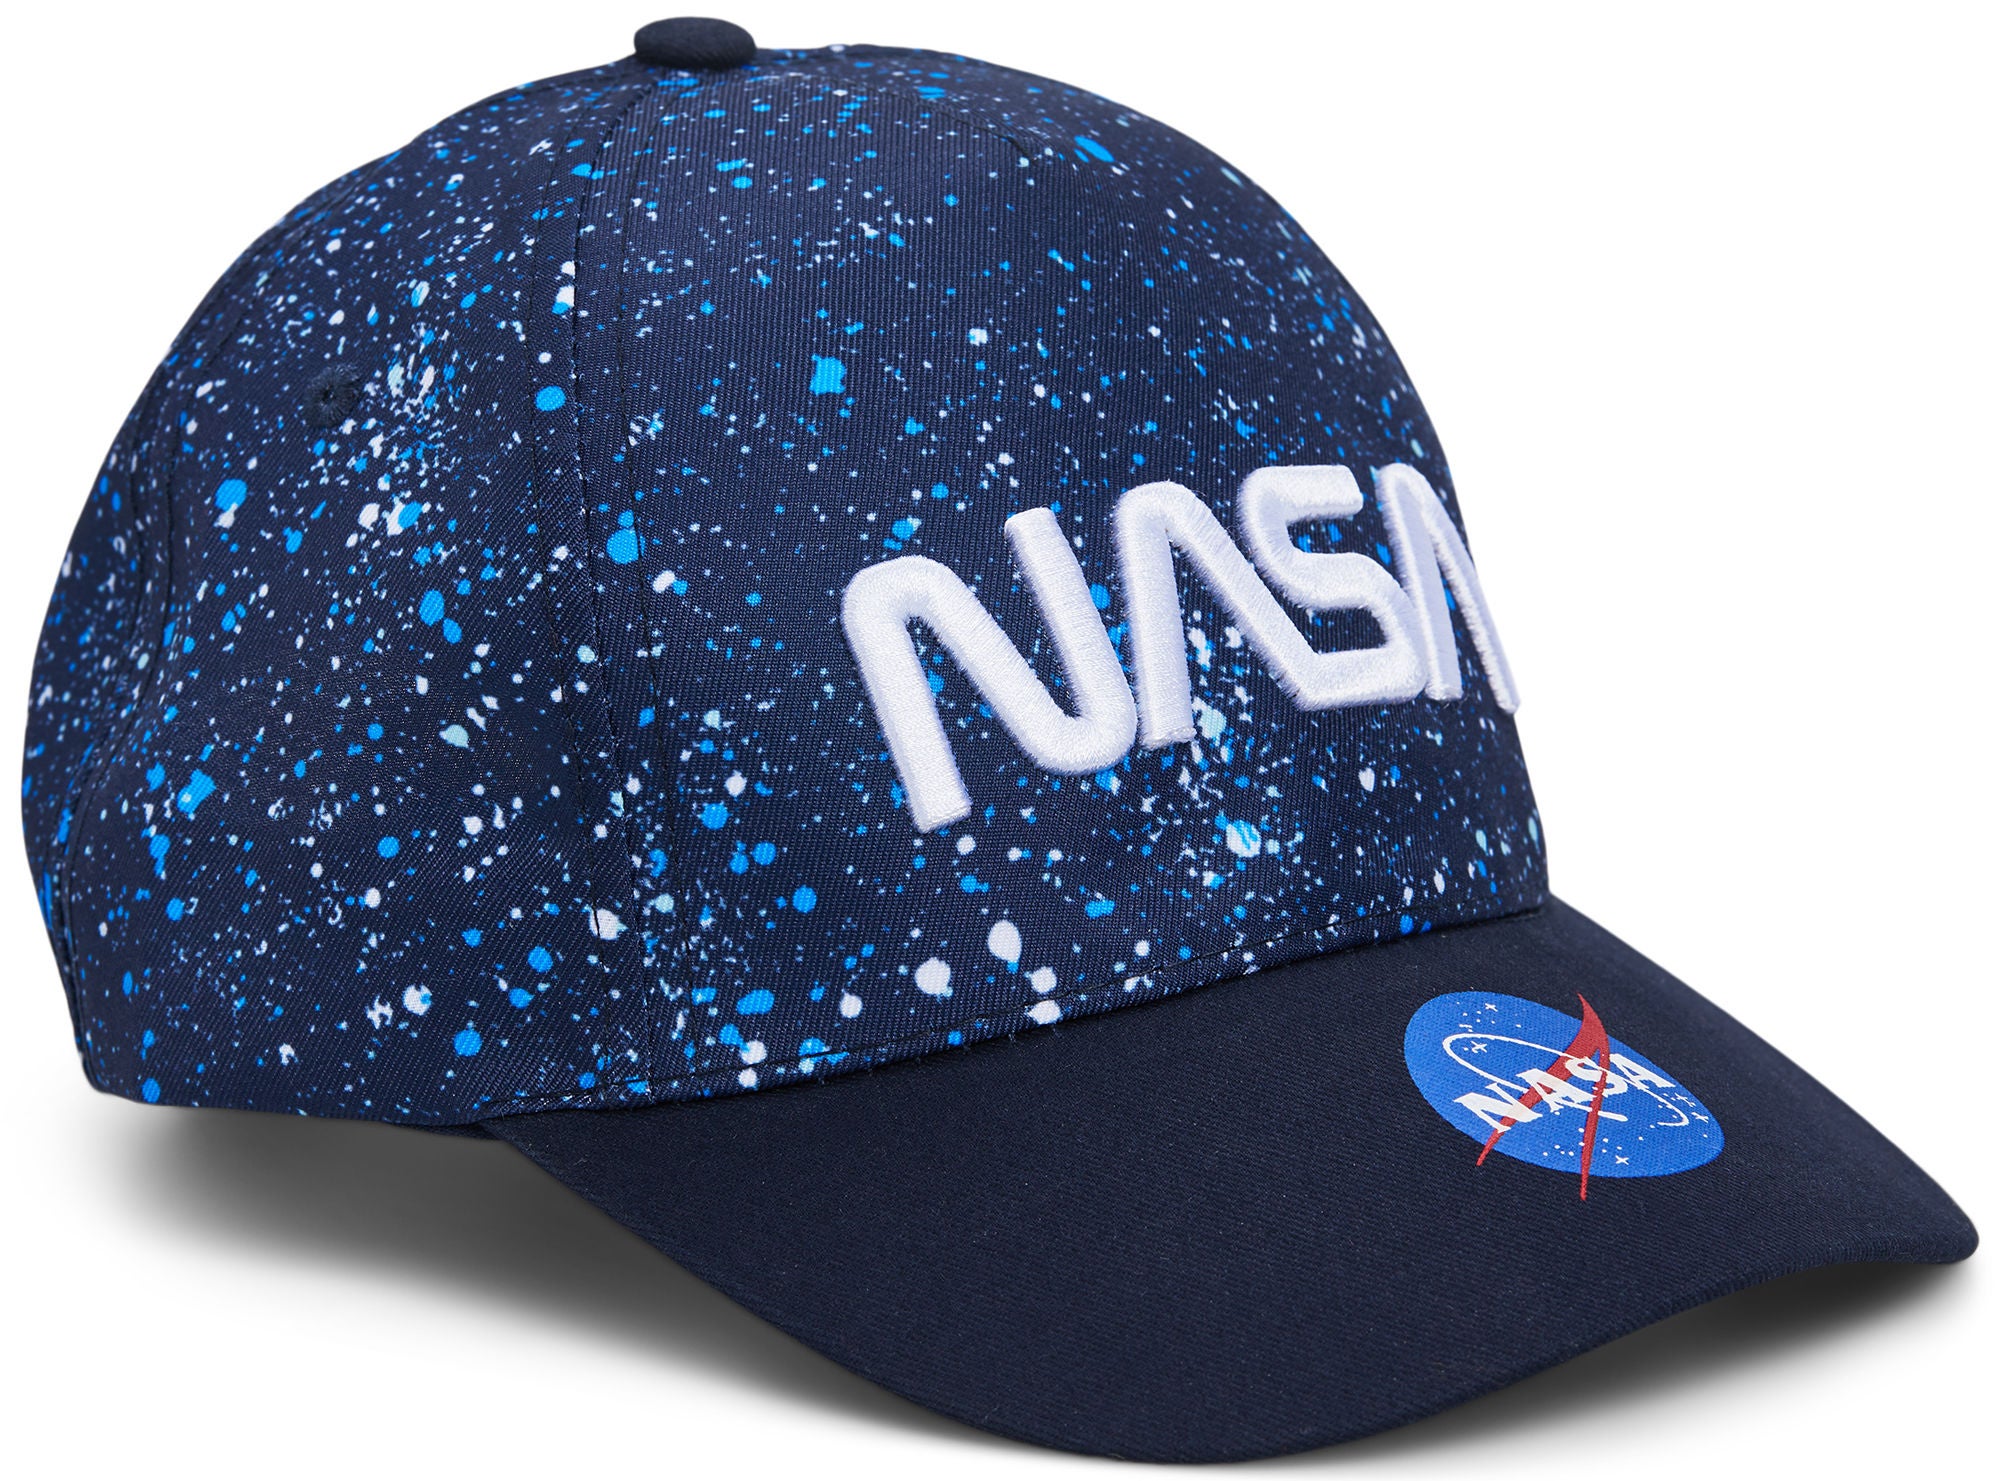 NASA Kappe, Blau